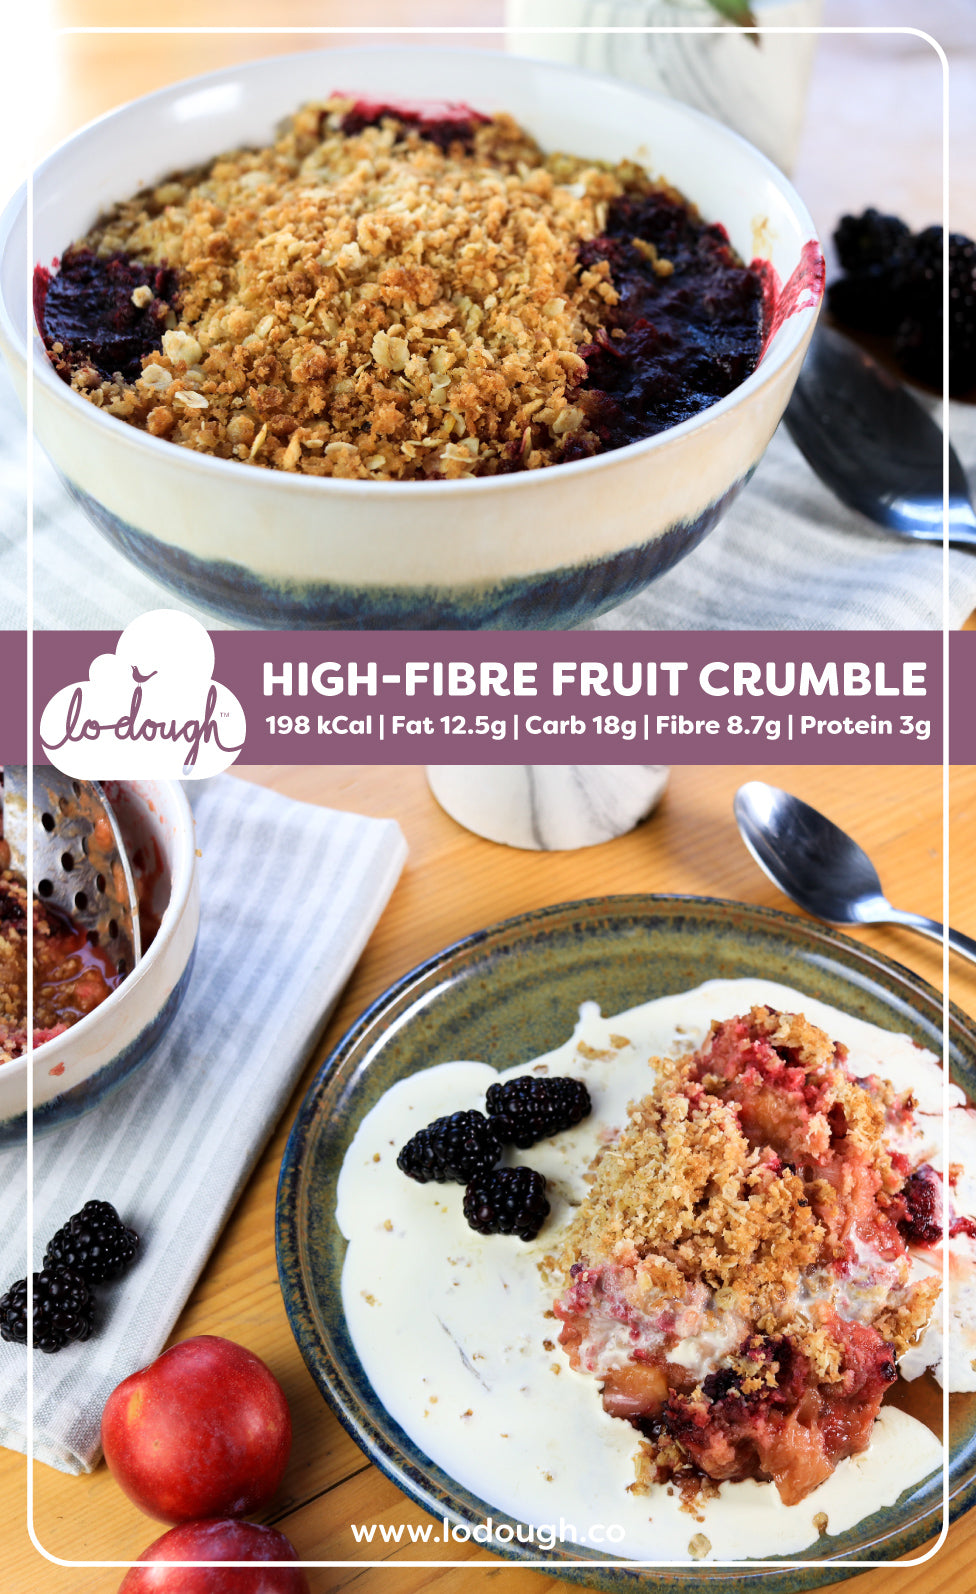 High-Fibre Fruit Crumble